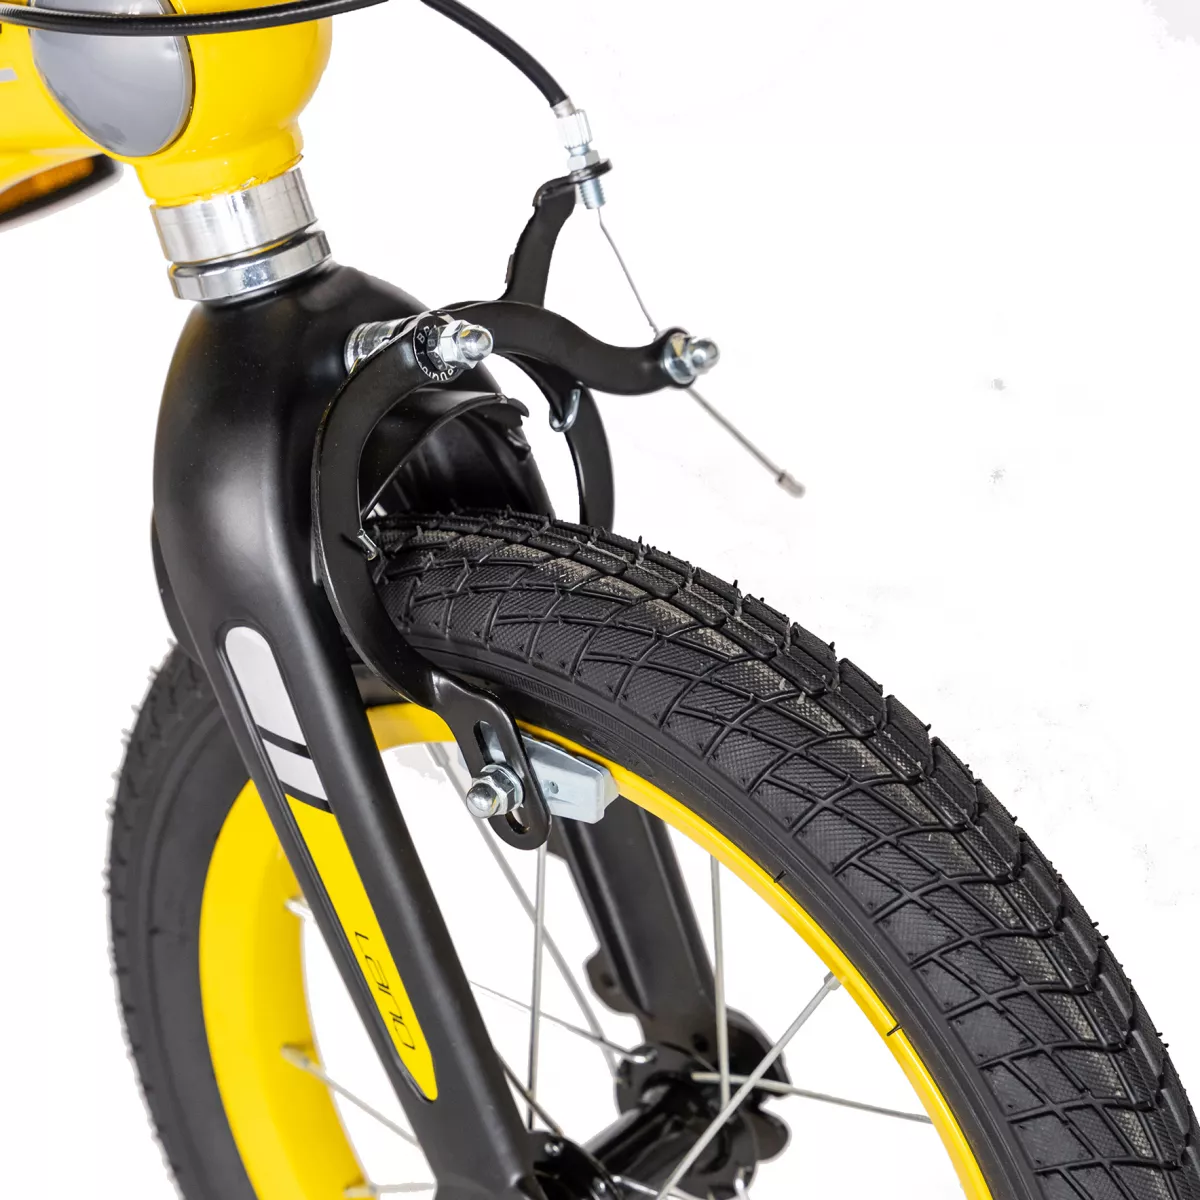 Bicicleta copii W1439D, roata 14", cadru aliaj magneziu, frana C-Brake, roti ajutatoare, 3-5 ani, galben/negru